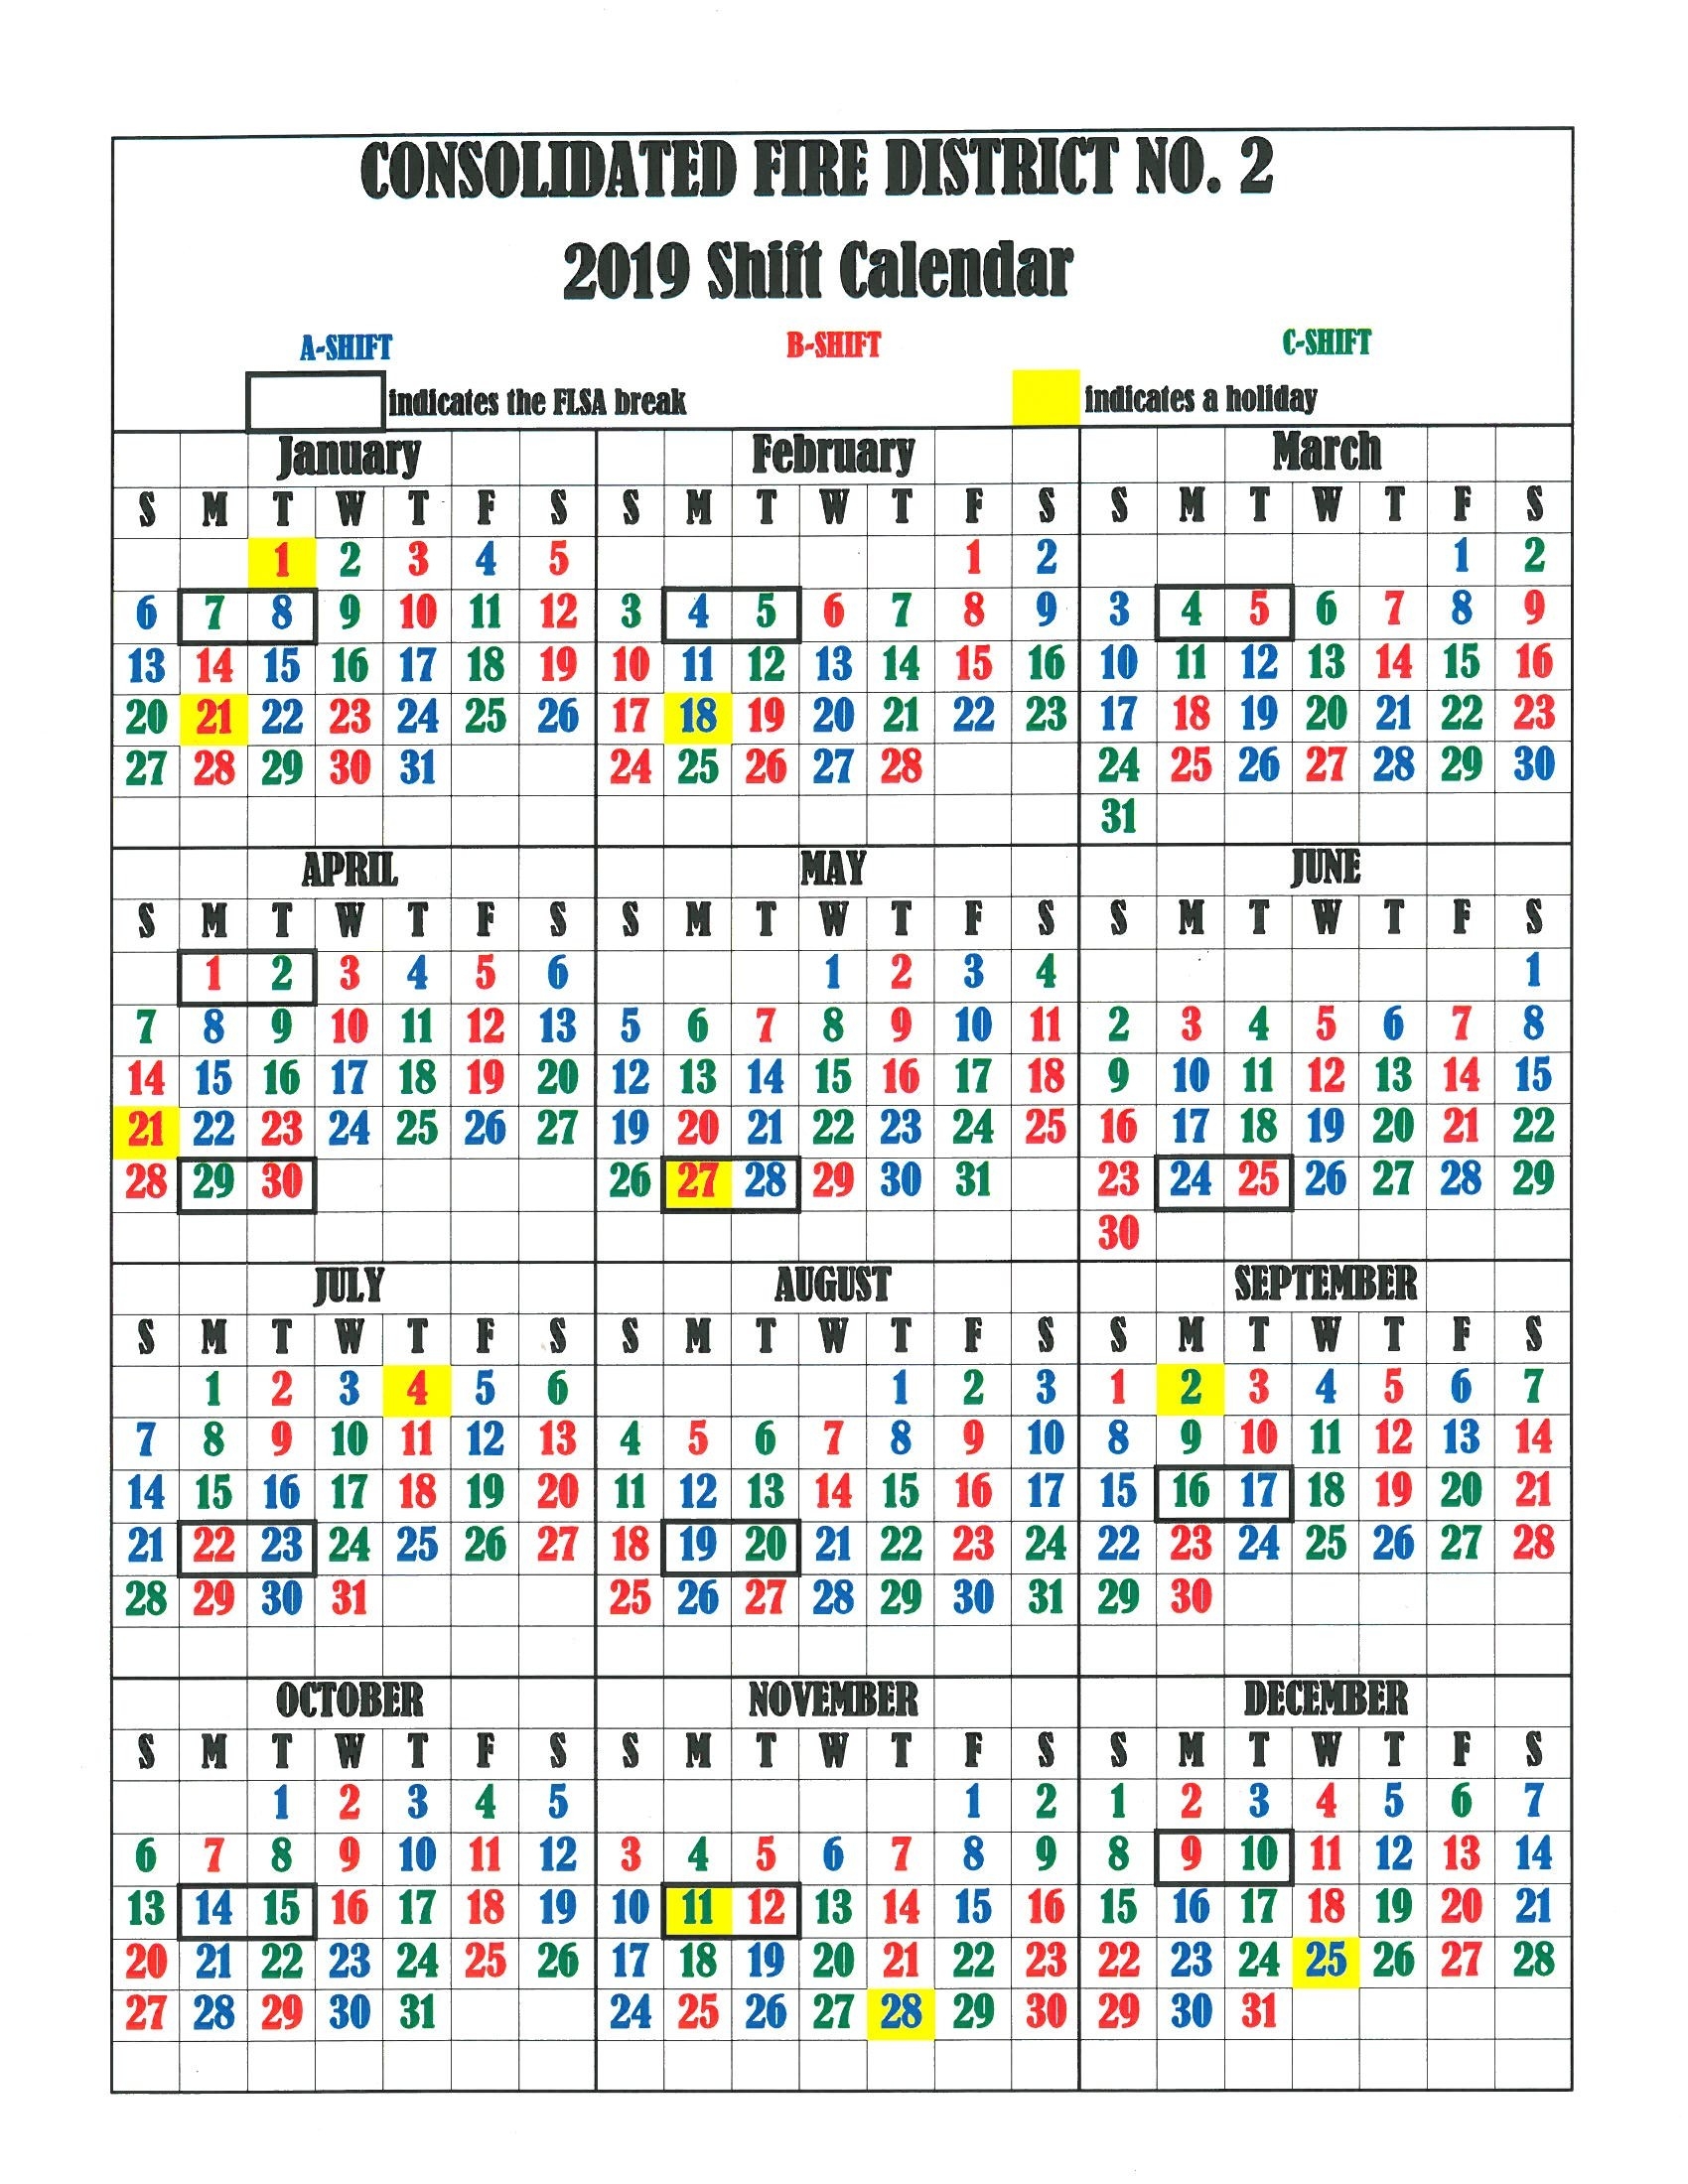 Cfd2 Shift Calendar - Consolidated Fire District #2  Fire Department Schedule 2020